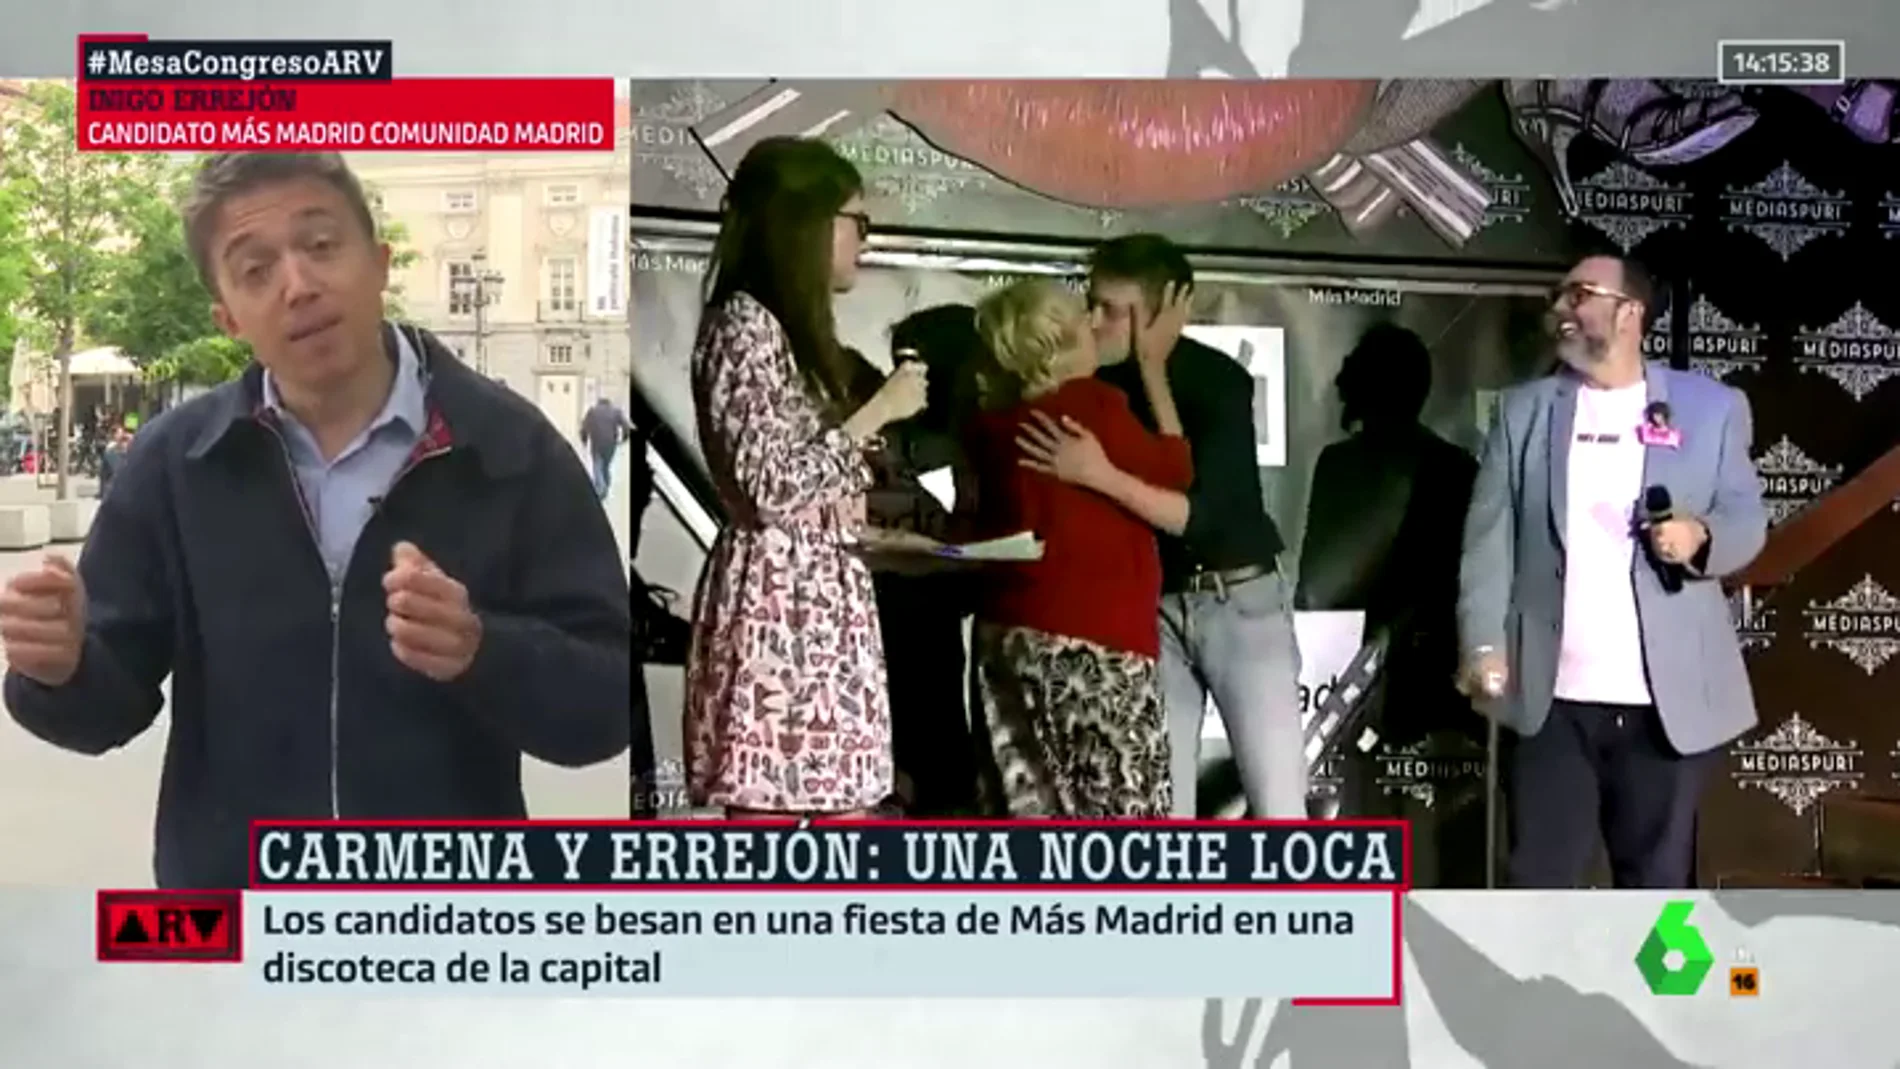 Íñigo Errejón: "Carmena me miró, no nos pudimos resistir y nos acabamos besando"